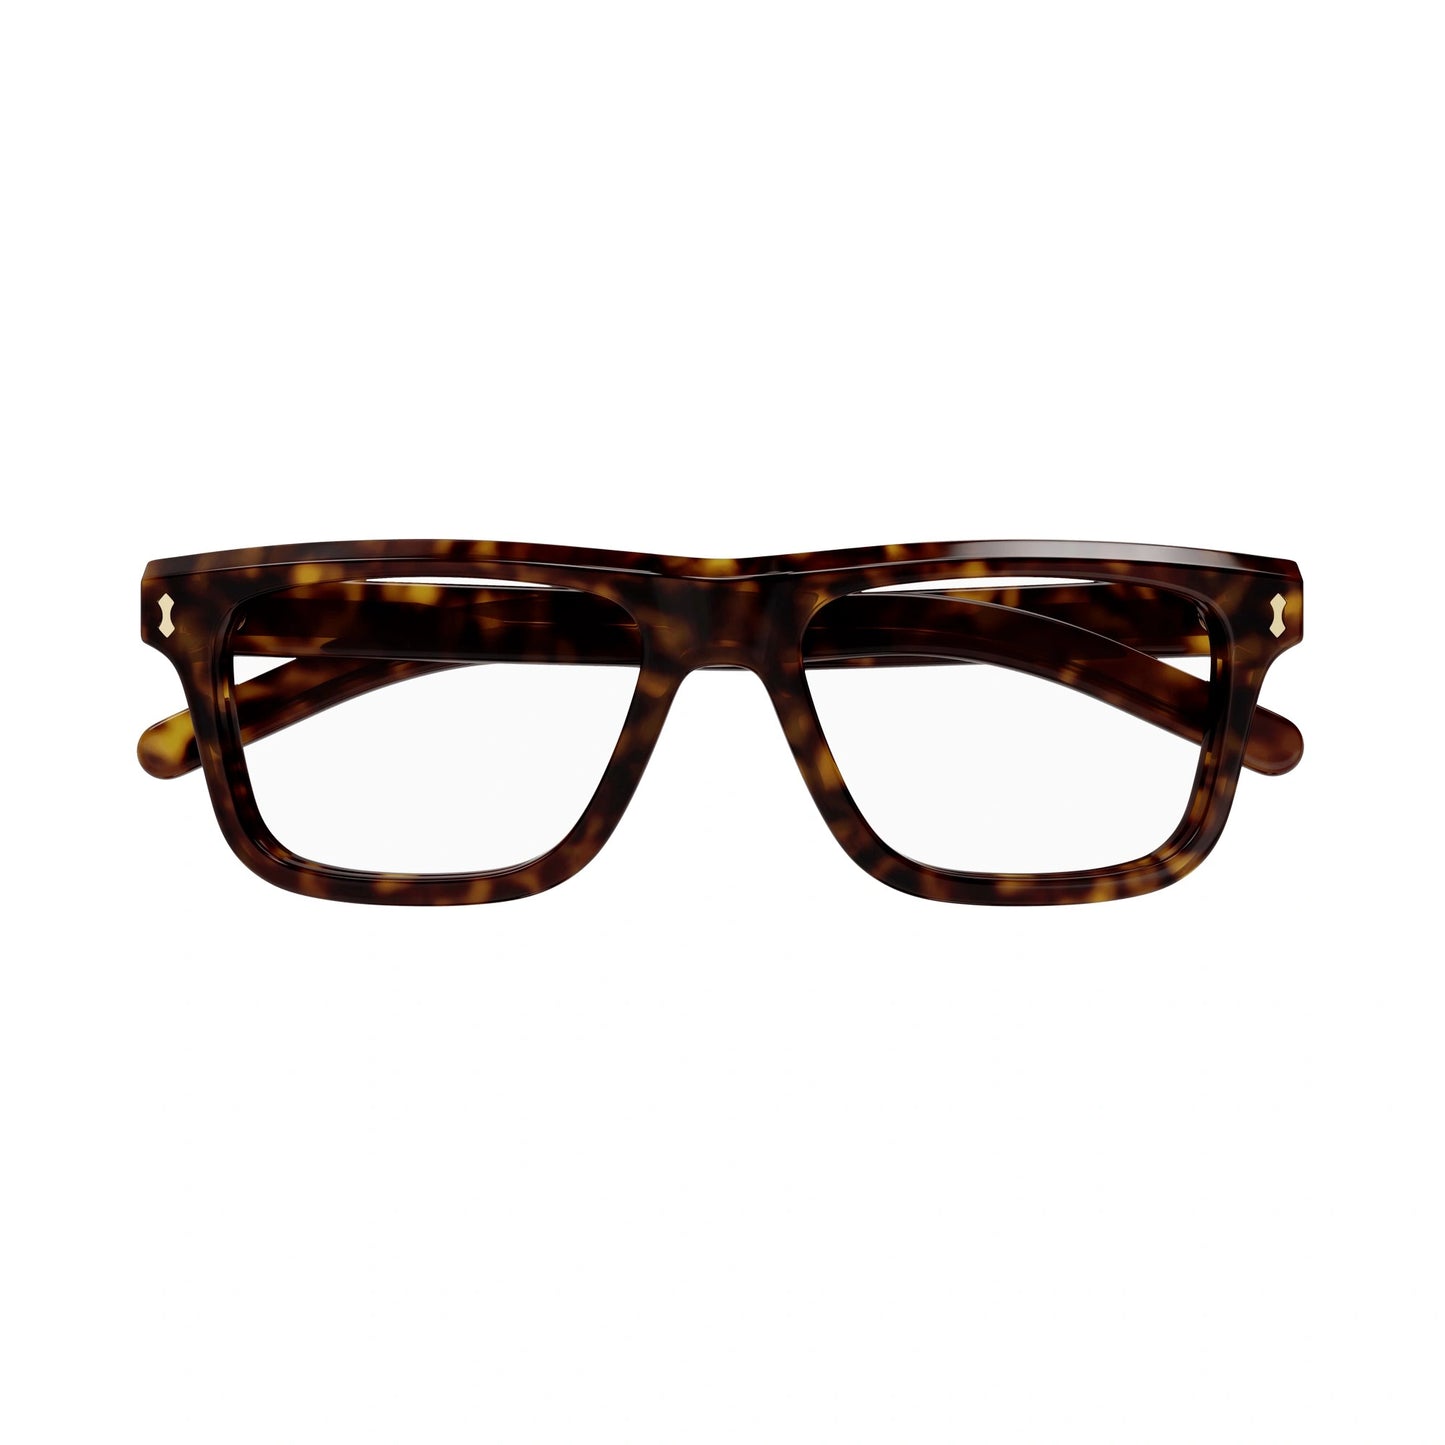 Gucci GG1525o-002 54mm New Eyeglasses